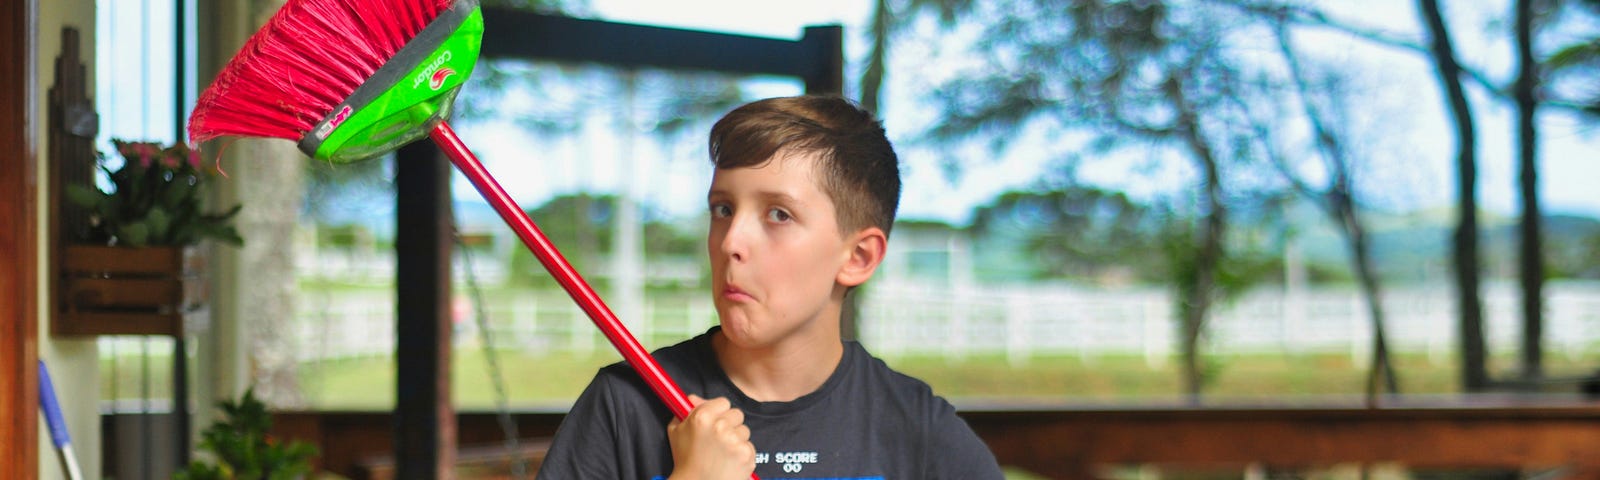 Teen with a broom